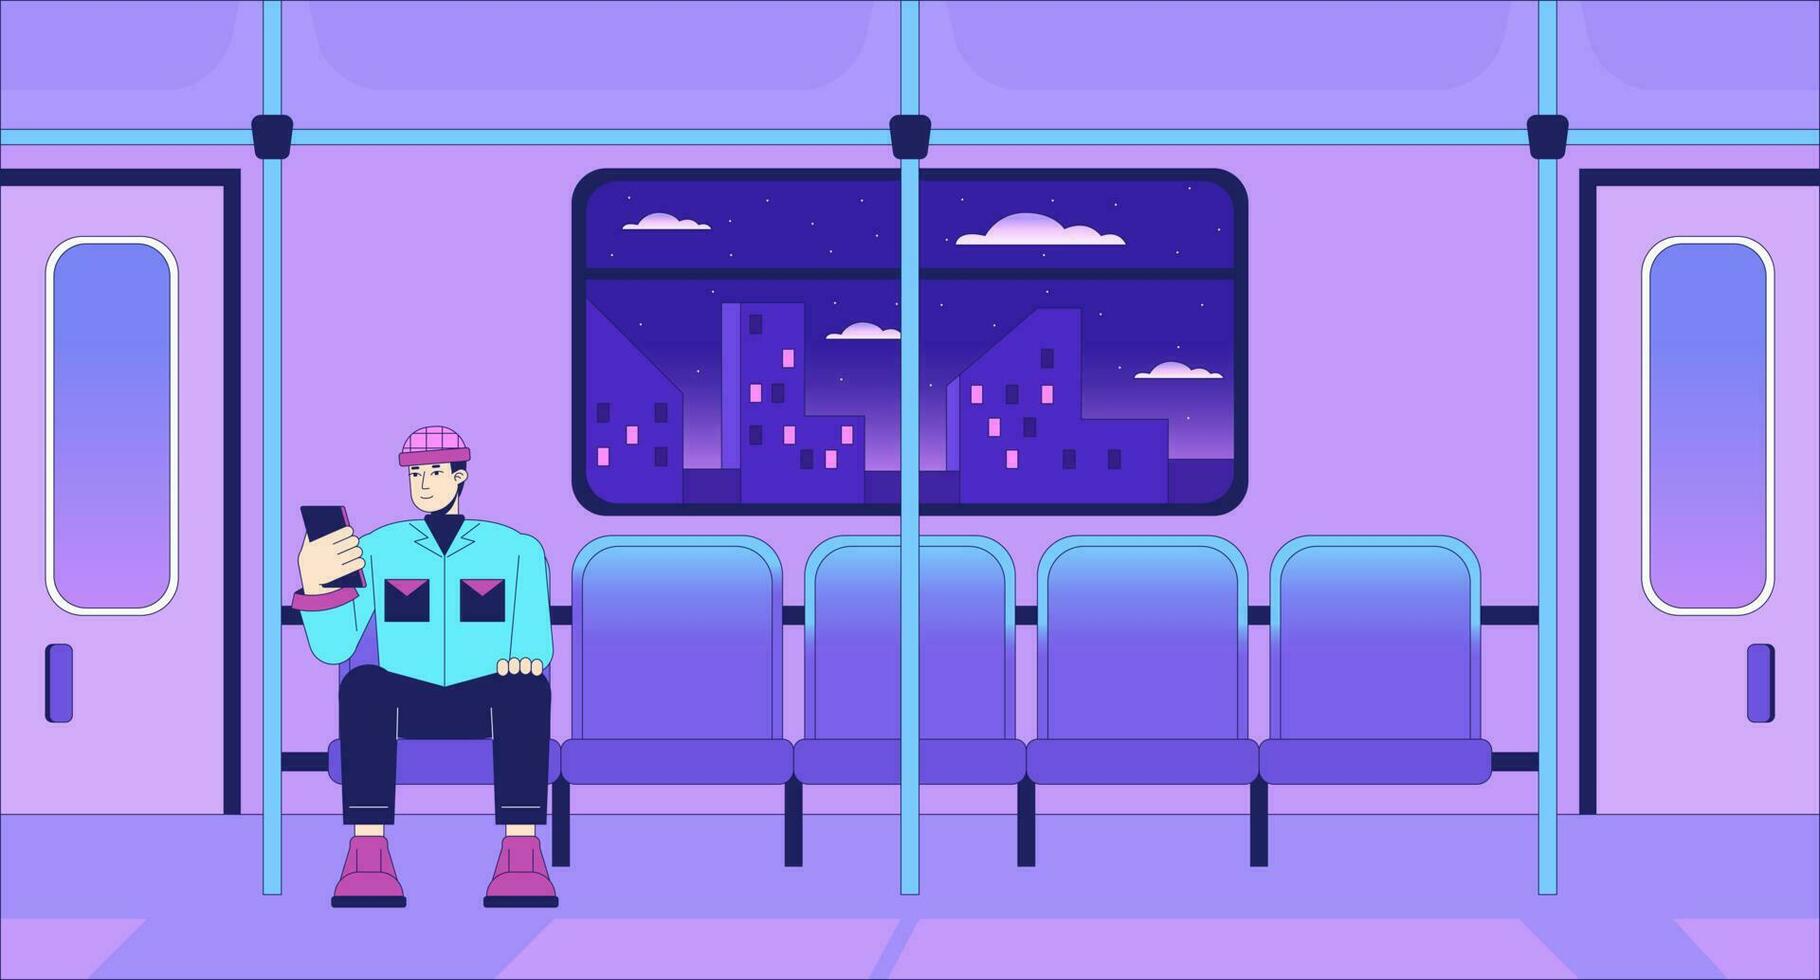 Commuter rail passenger lo fi chill wallpaper. Rapid transit. Young asian man subway passenger 2D vector cartoon character illustration, vaporwave background. 80s retro album art, synthwave aesthetics